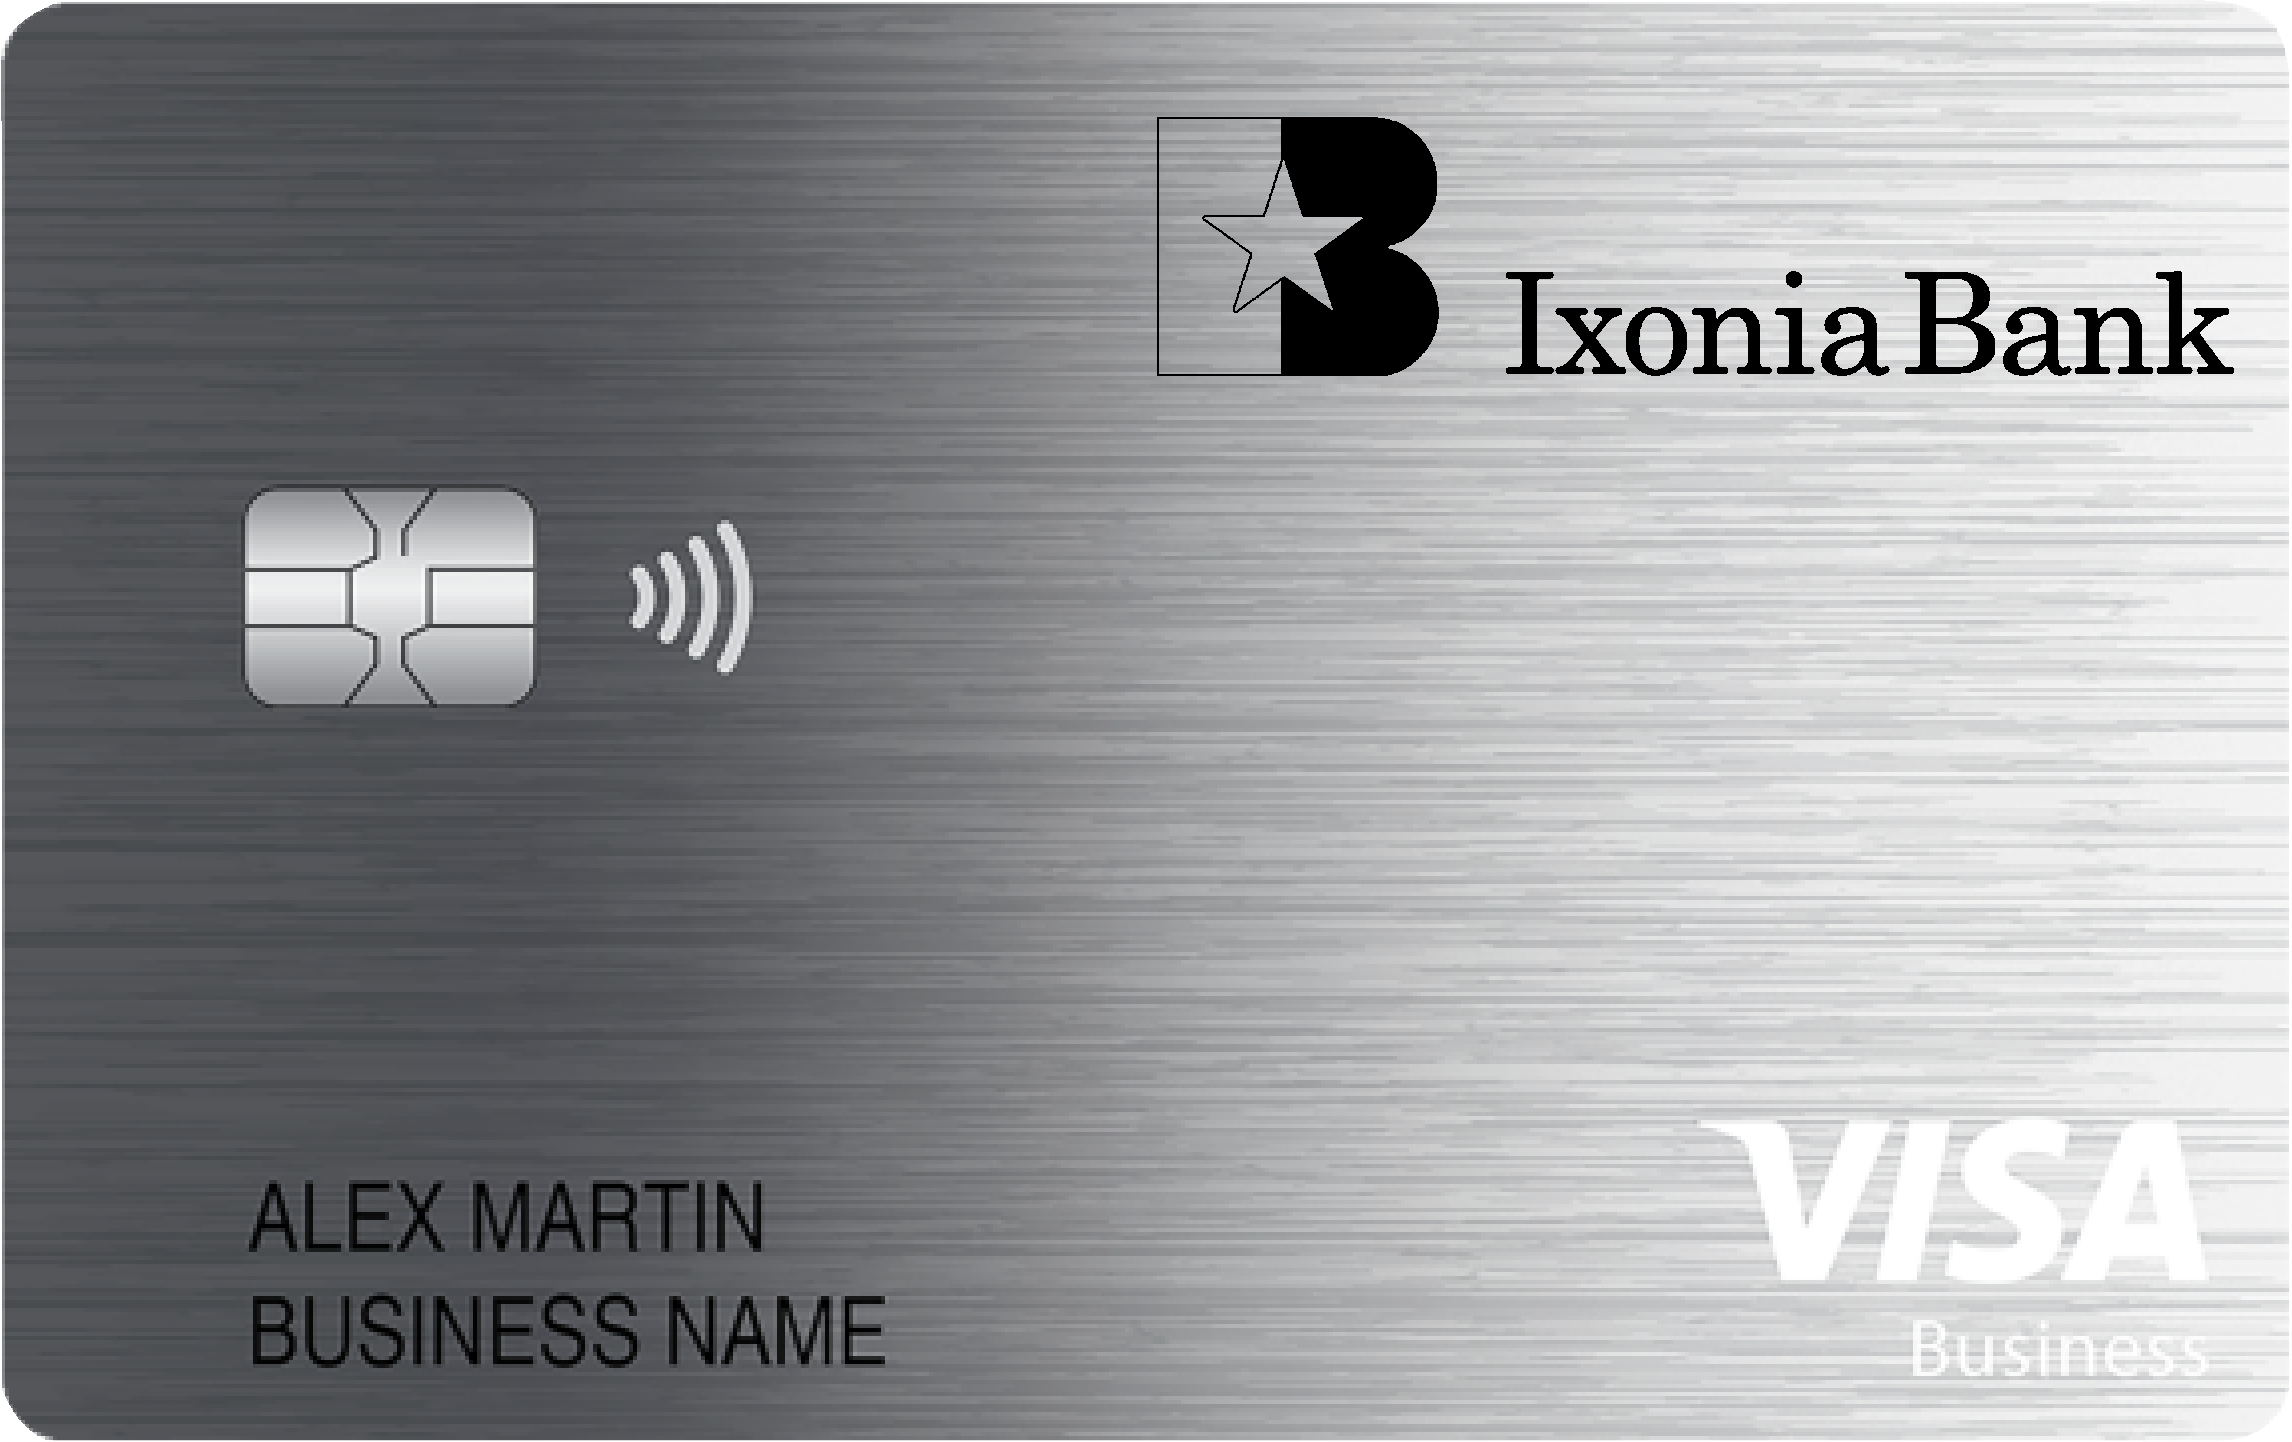 Ixonia Bank Business Cash Preferred Card